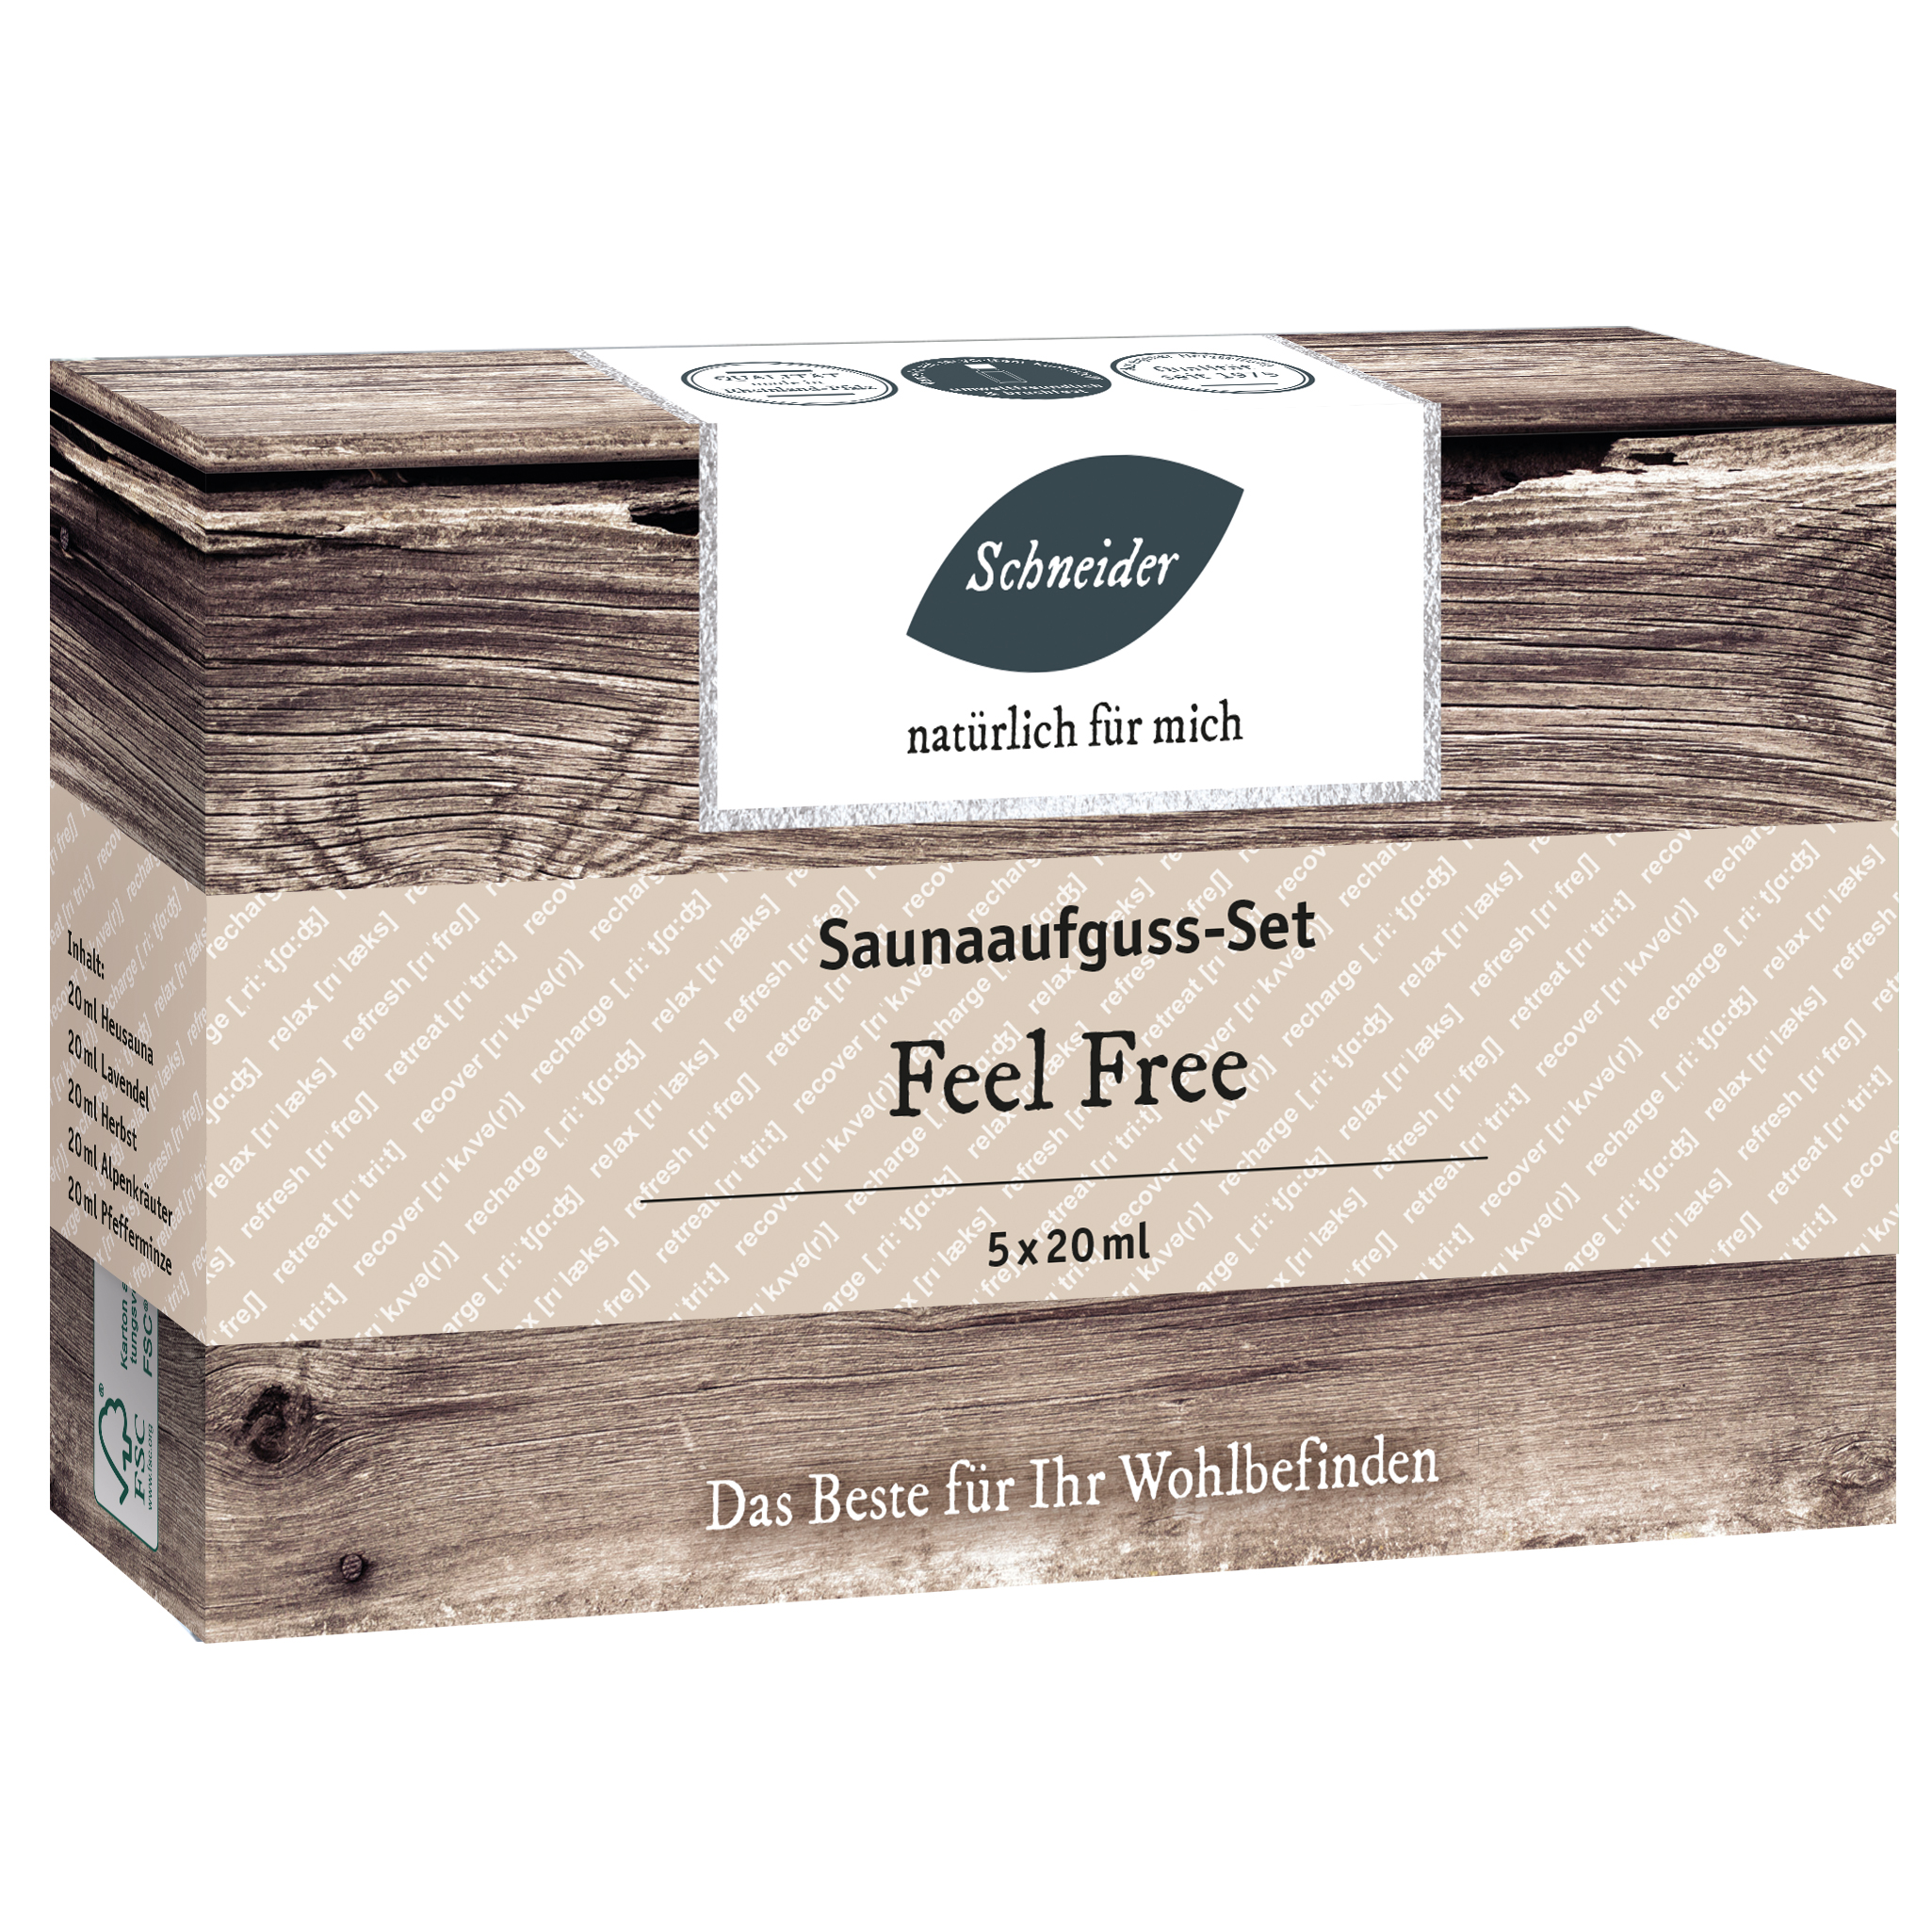 Saunaaufguss-Set - Feel Free